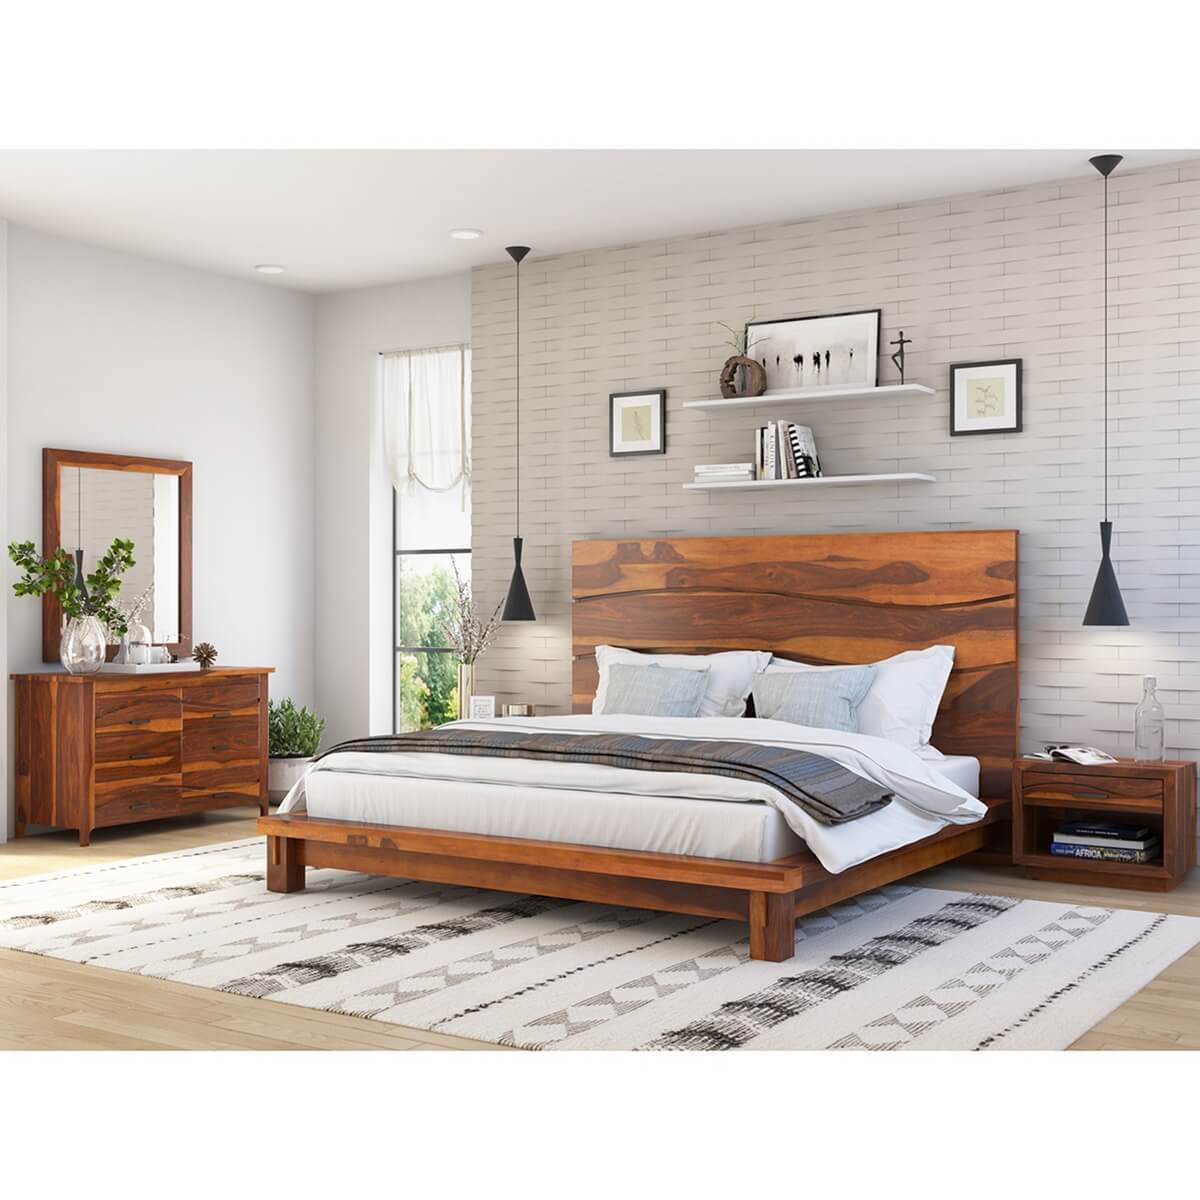 https://www.sierralivingconcepts.com/images/thumbs/0395834_santa-barbara-solid-wood-4-piece-bedroom-set.jpeg